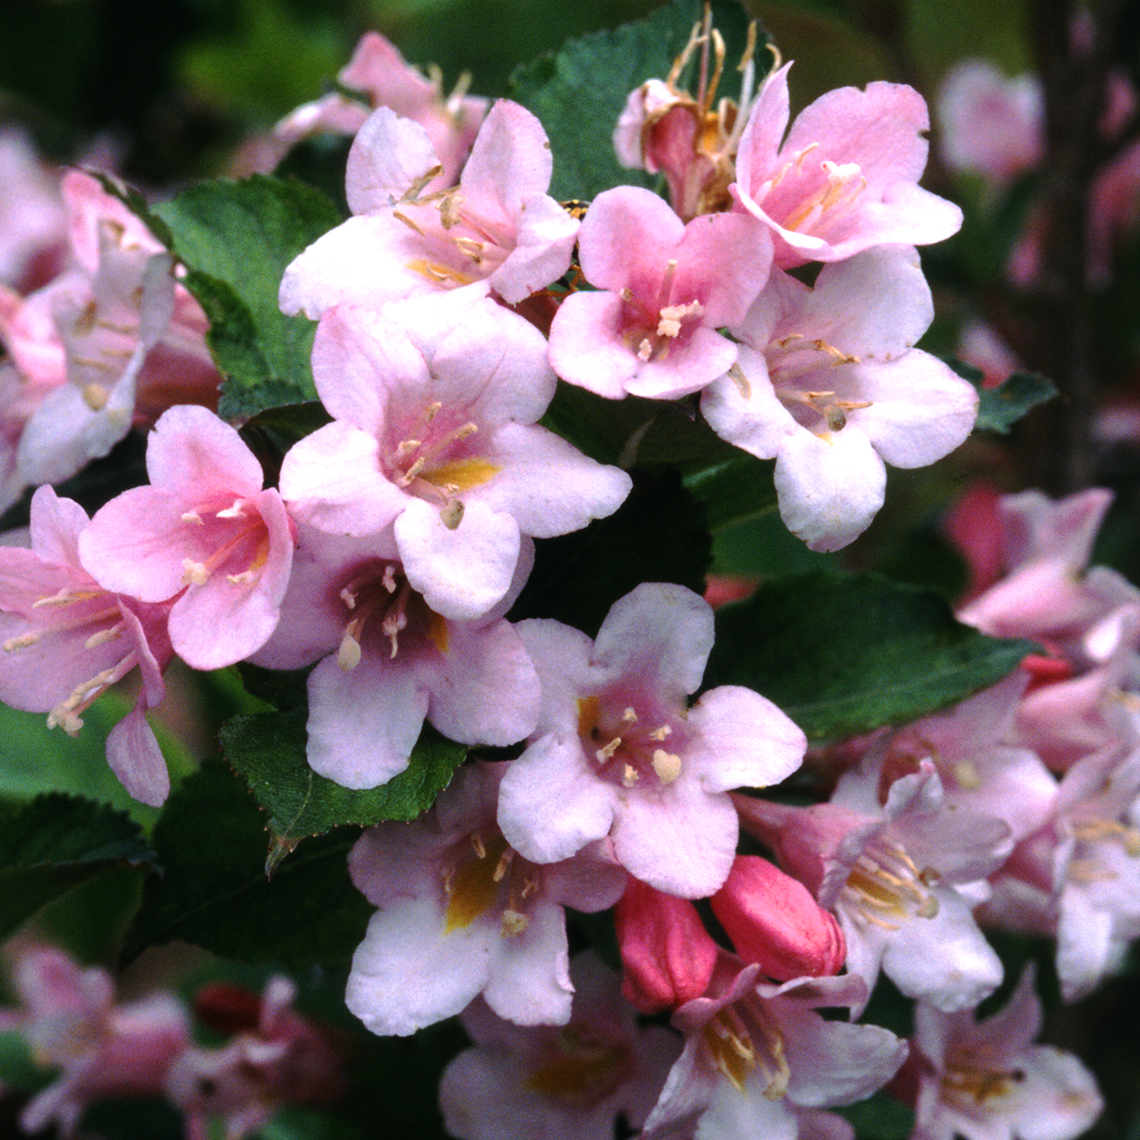 The light pink flowers of Polka weigela